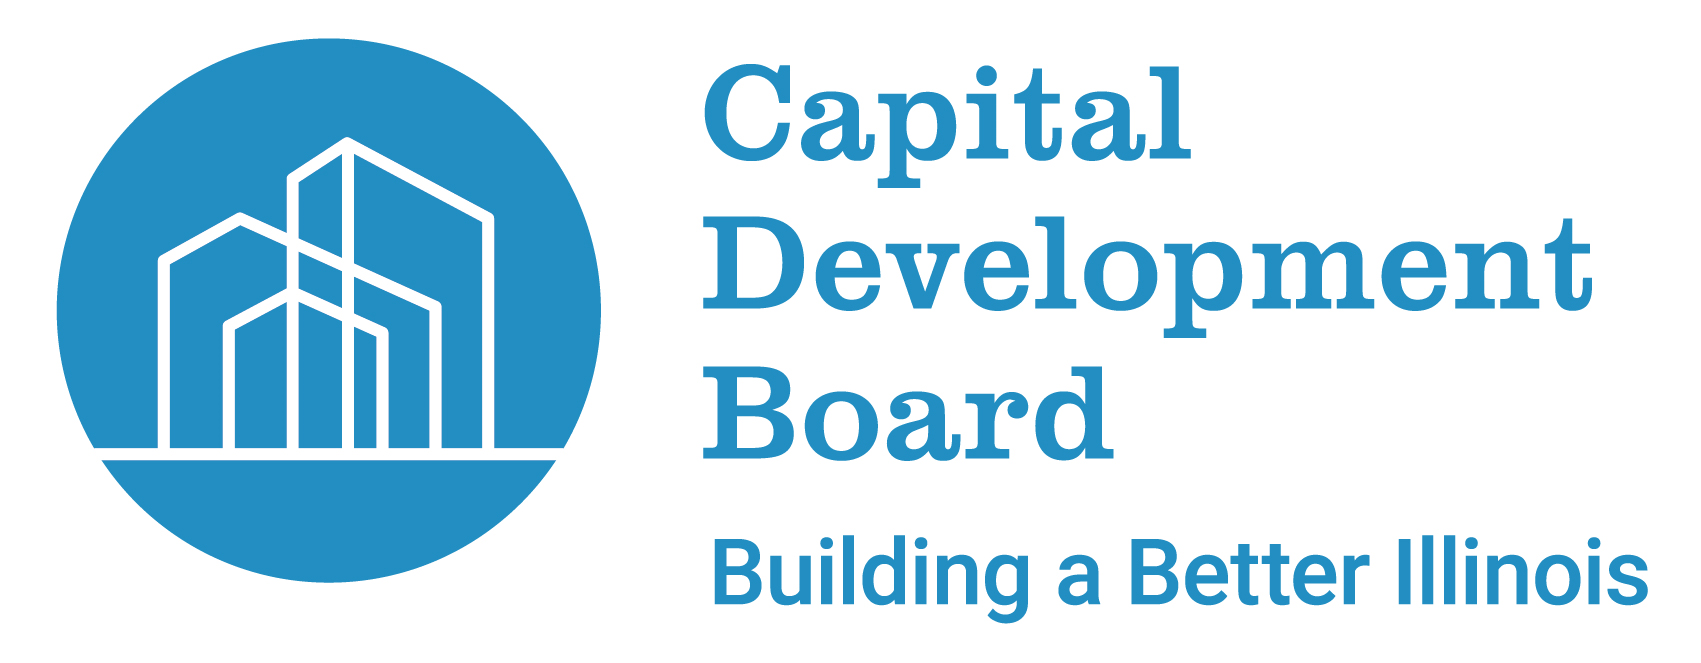 Capital Development Board